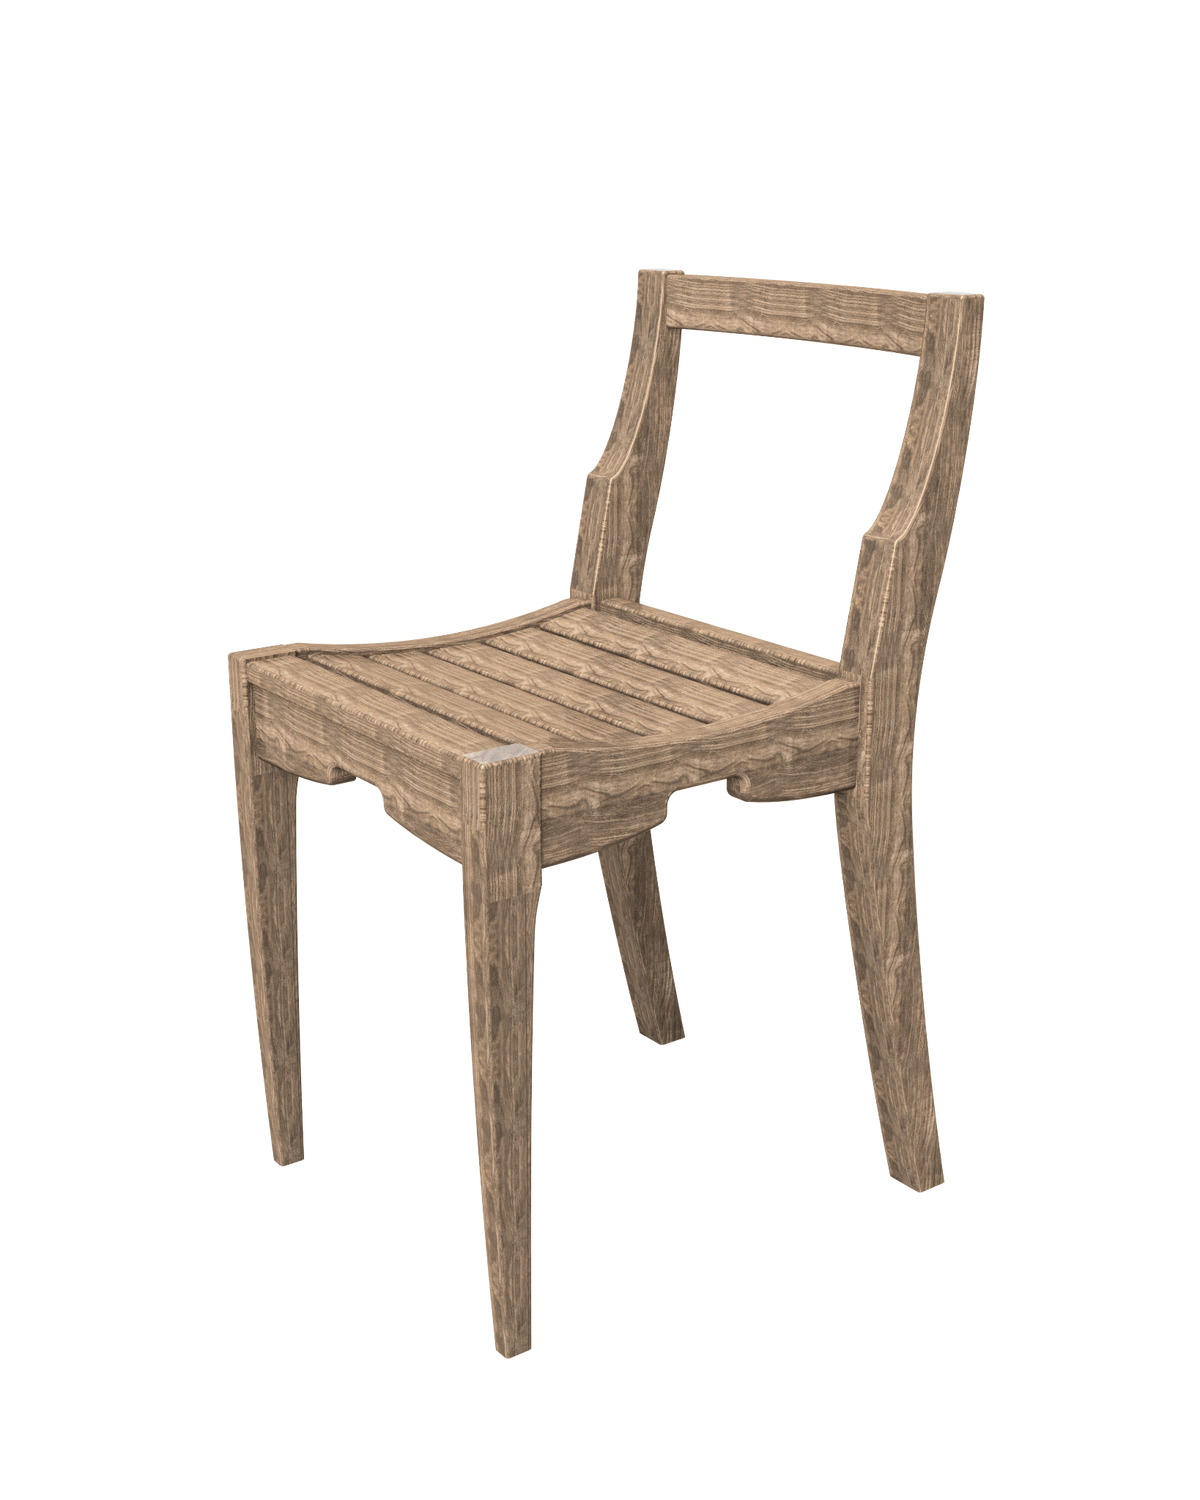 Great walnut dining chair